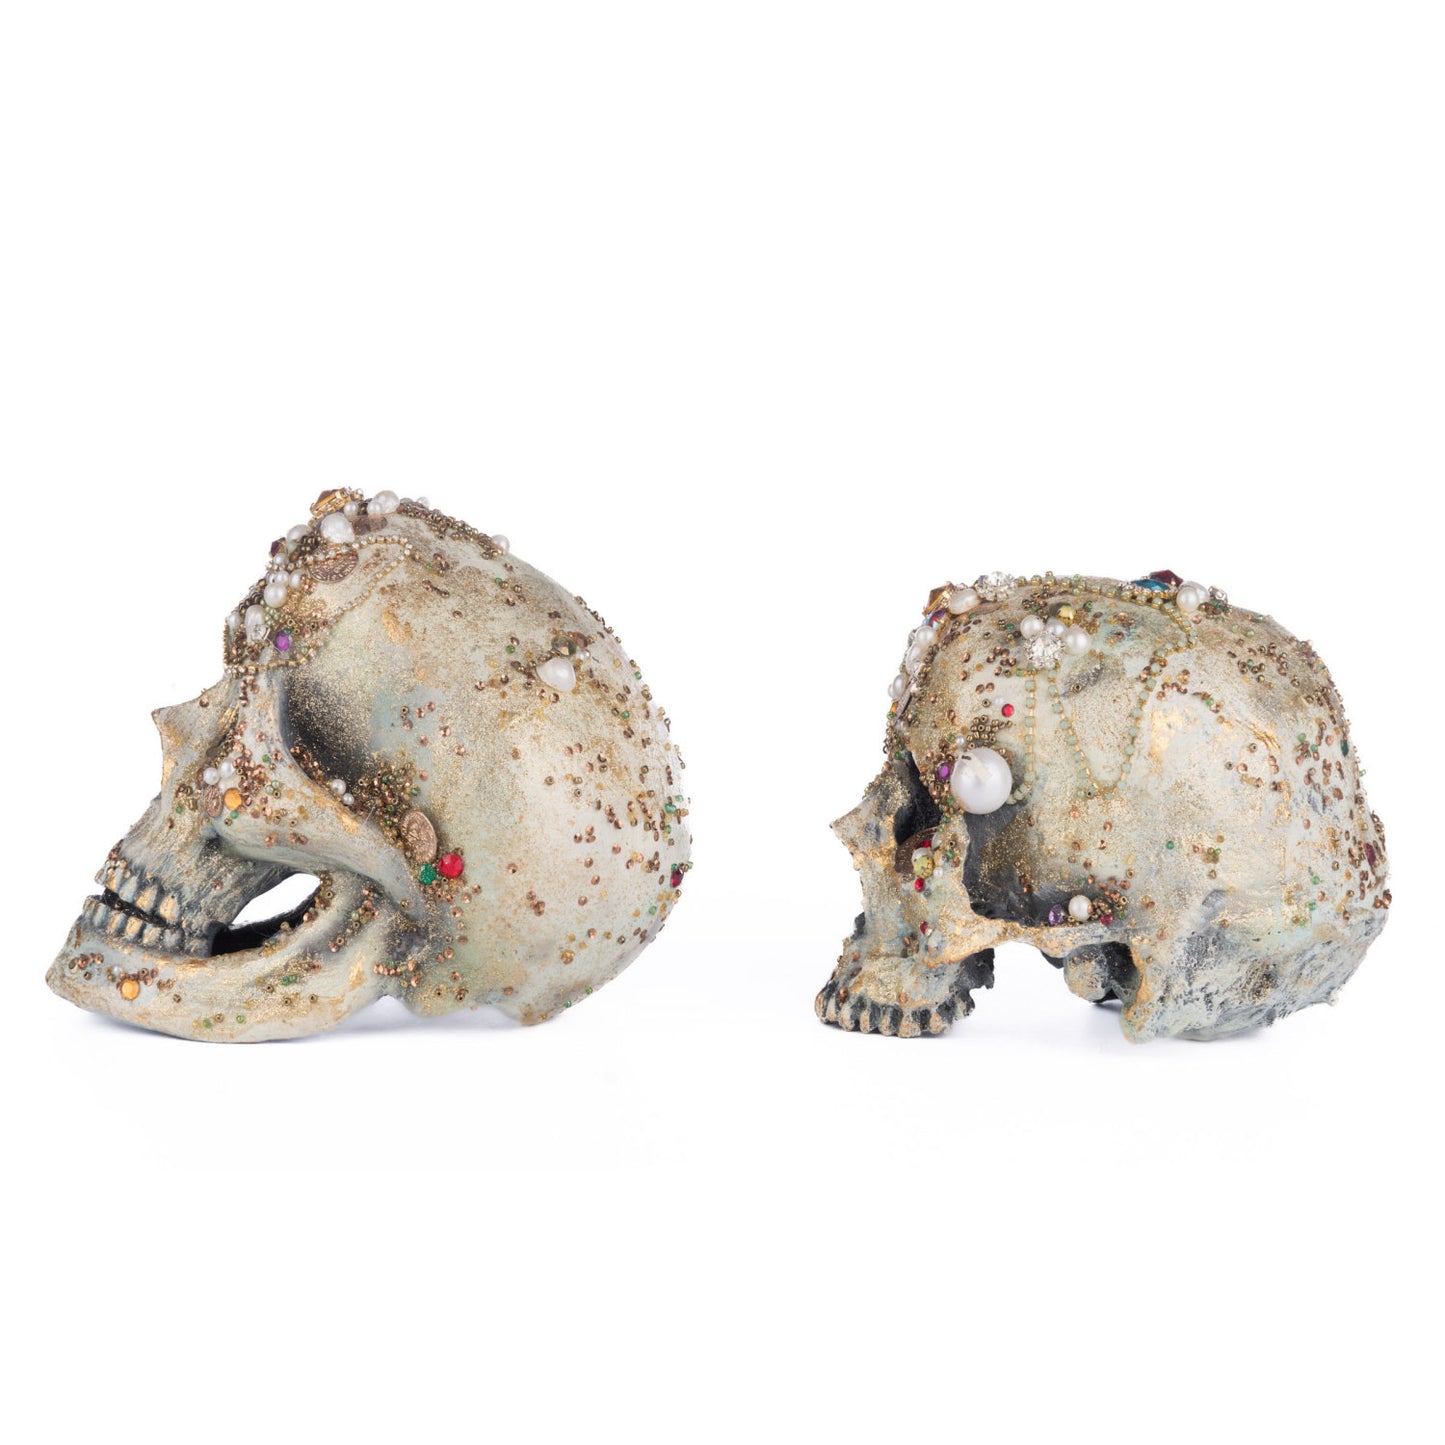 Treacherous Treasure 2024 Tabletop Jewel Encrusted Skulls Assortment Of 2, 7-in